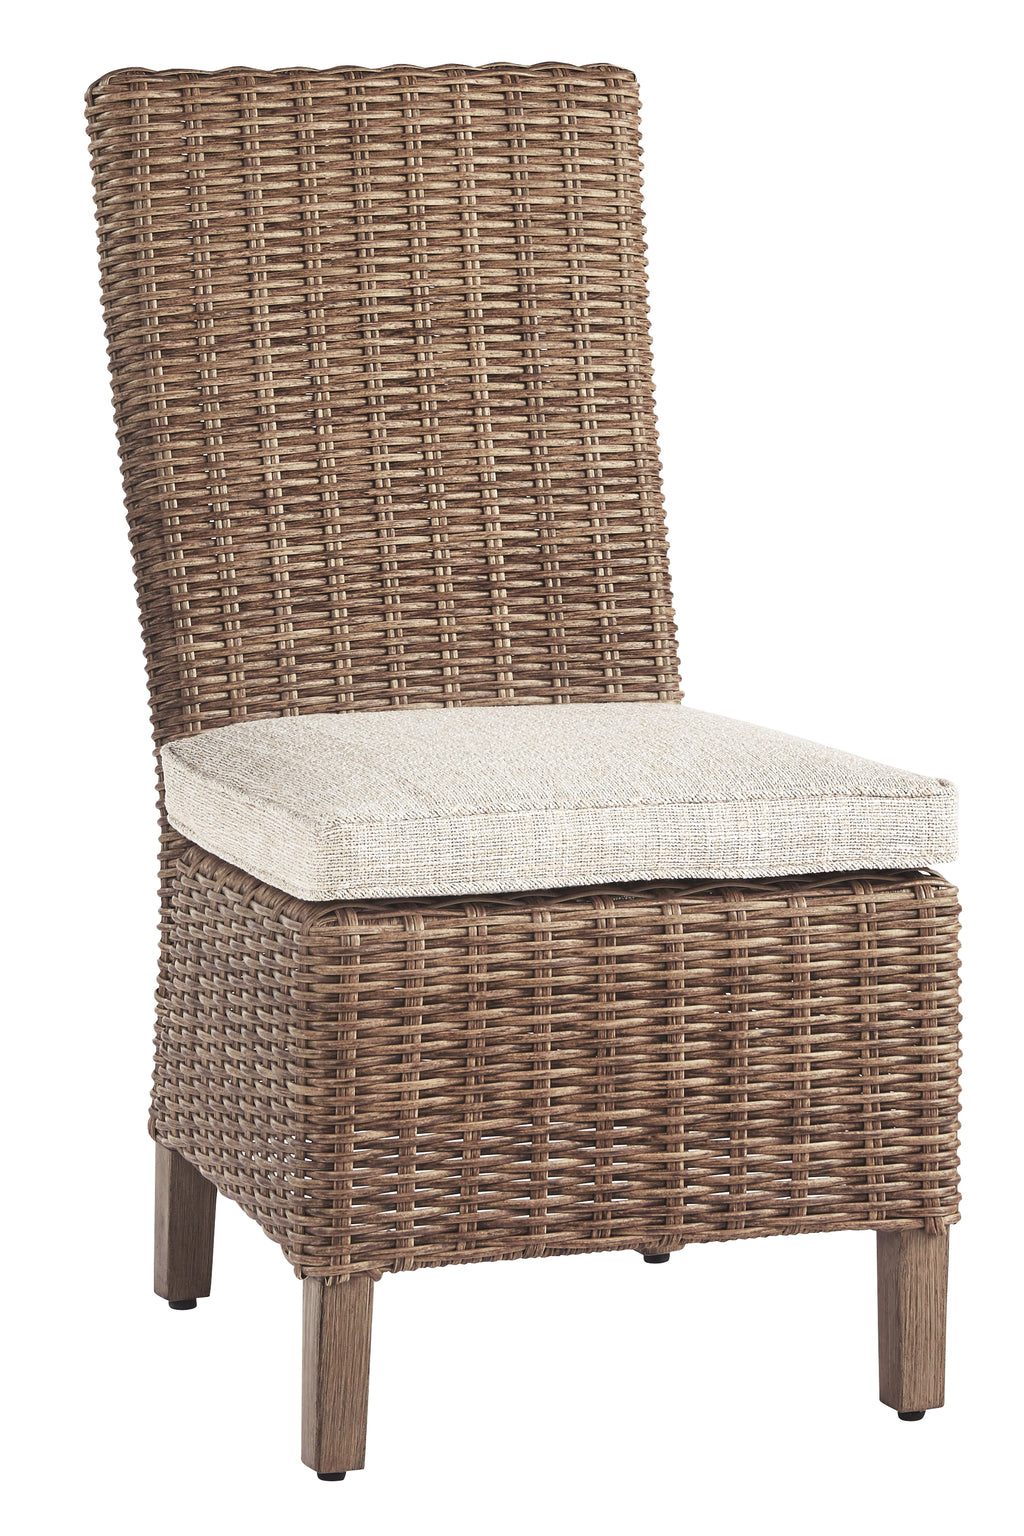 Beachcroft P791-601 Beige Side Chair with Cushion 2CN